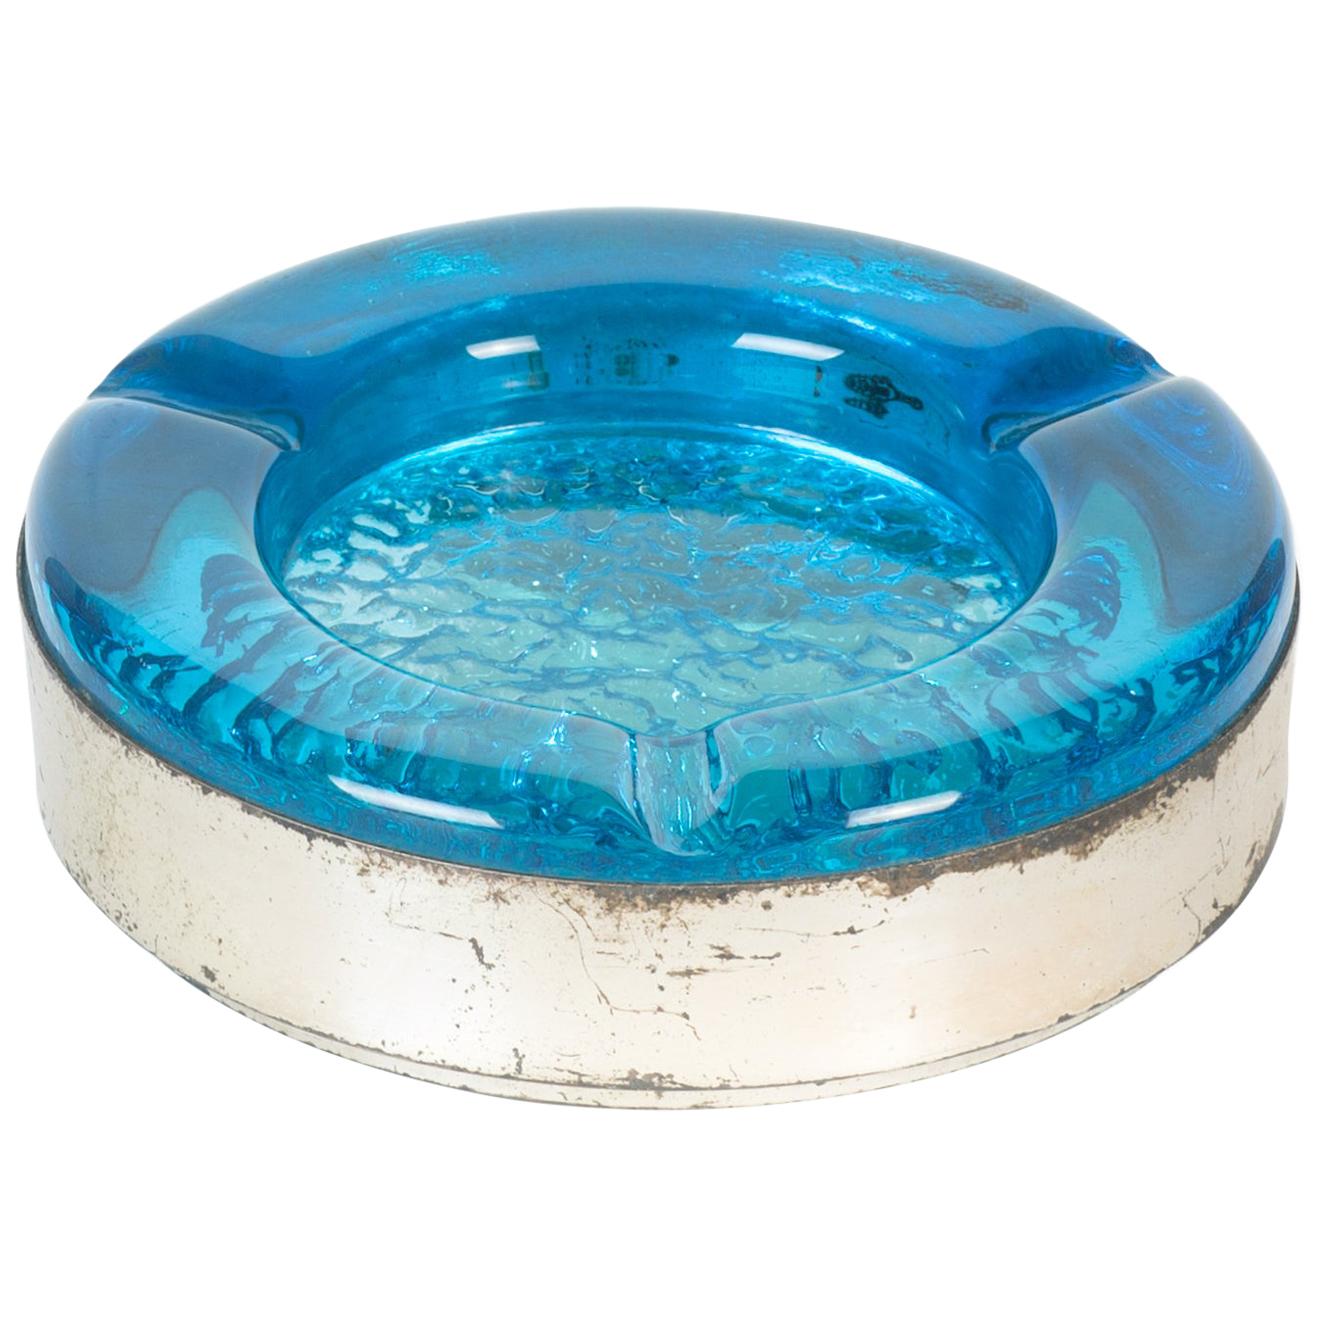 Kind ashtray BLUE #39 